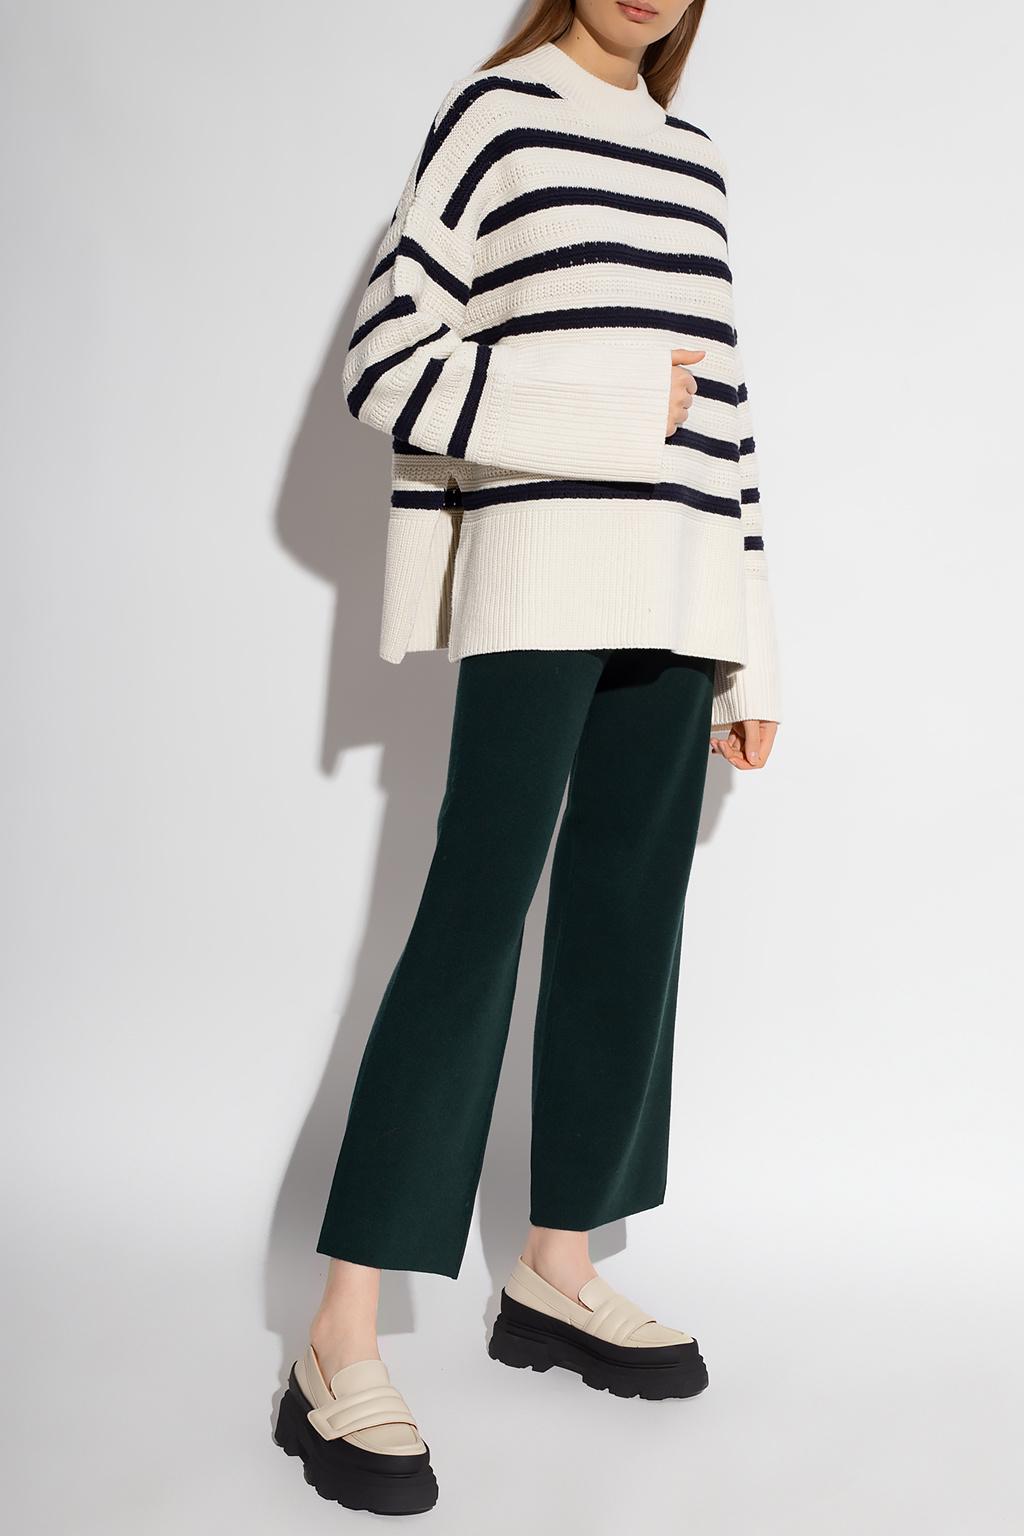 Samsøe & Samsøe 'raili' Striped Sweater in White | Lyst